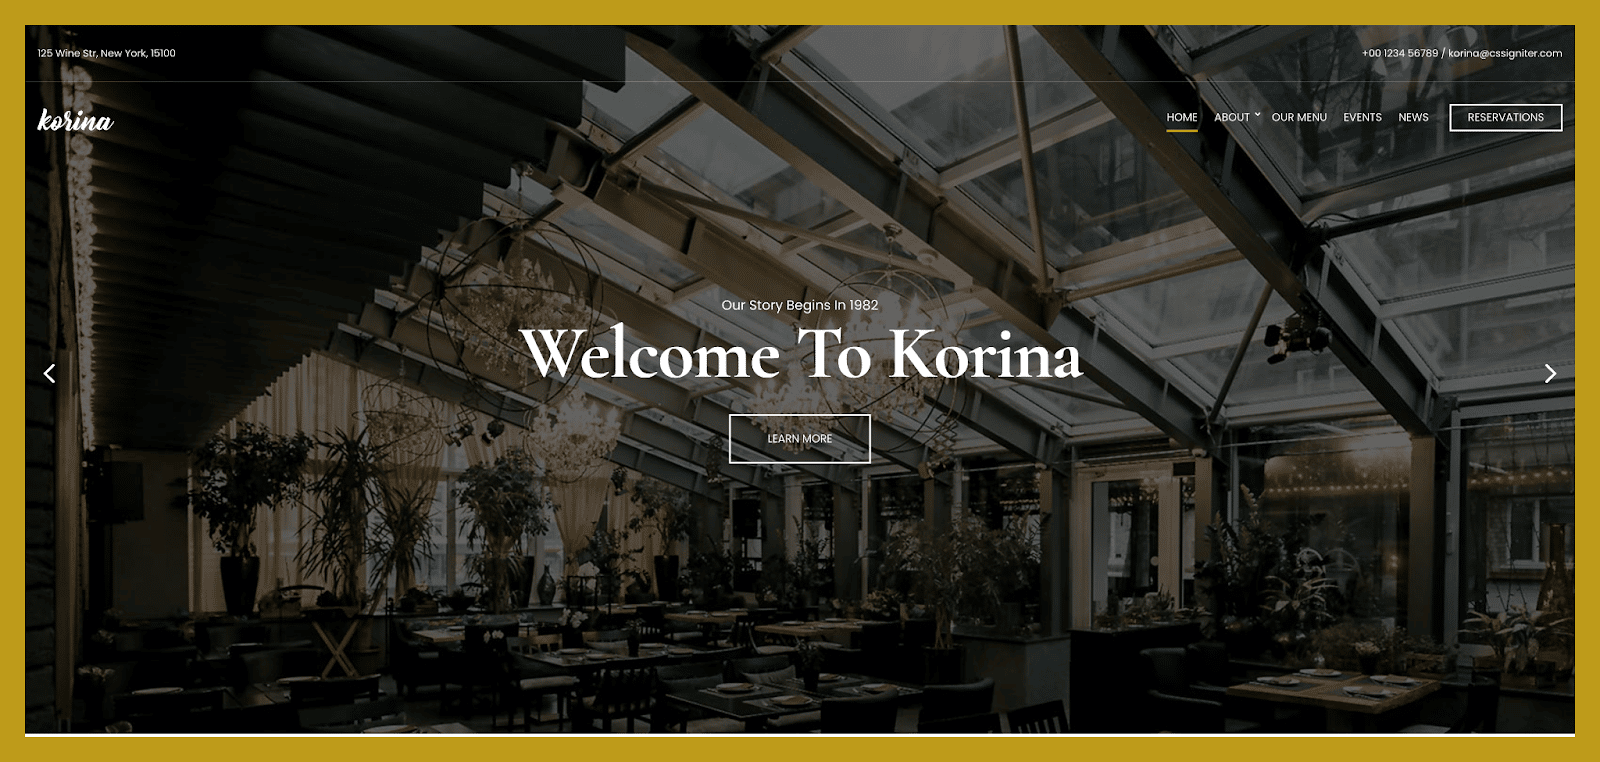 The Korina WordPress theme.